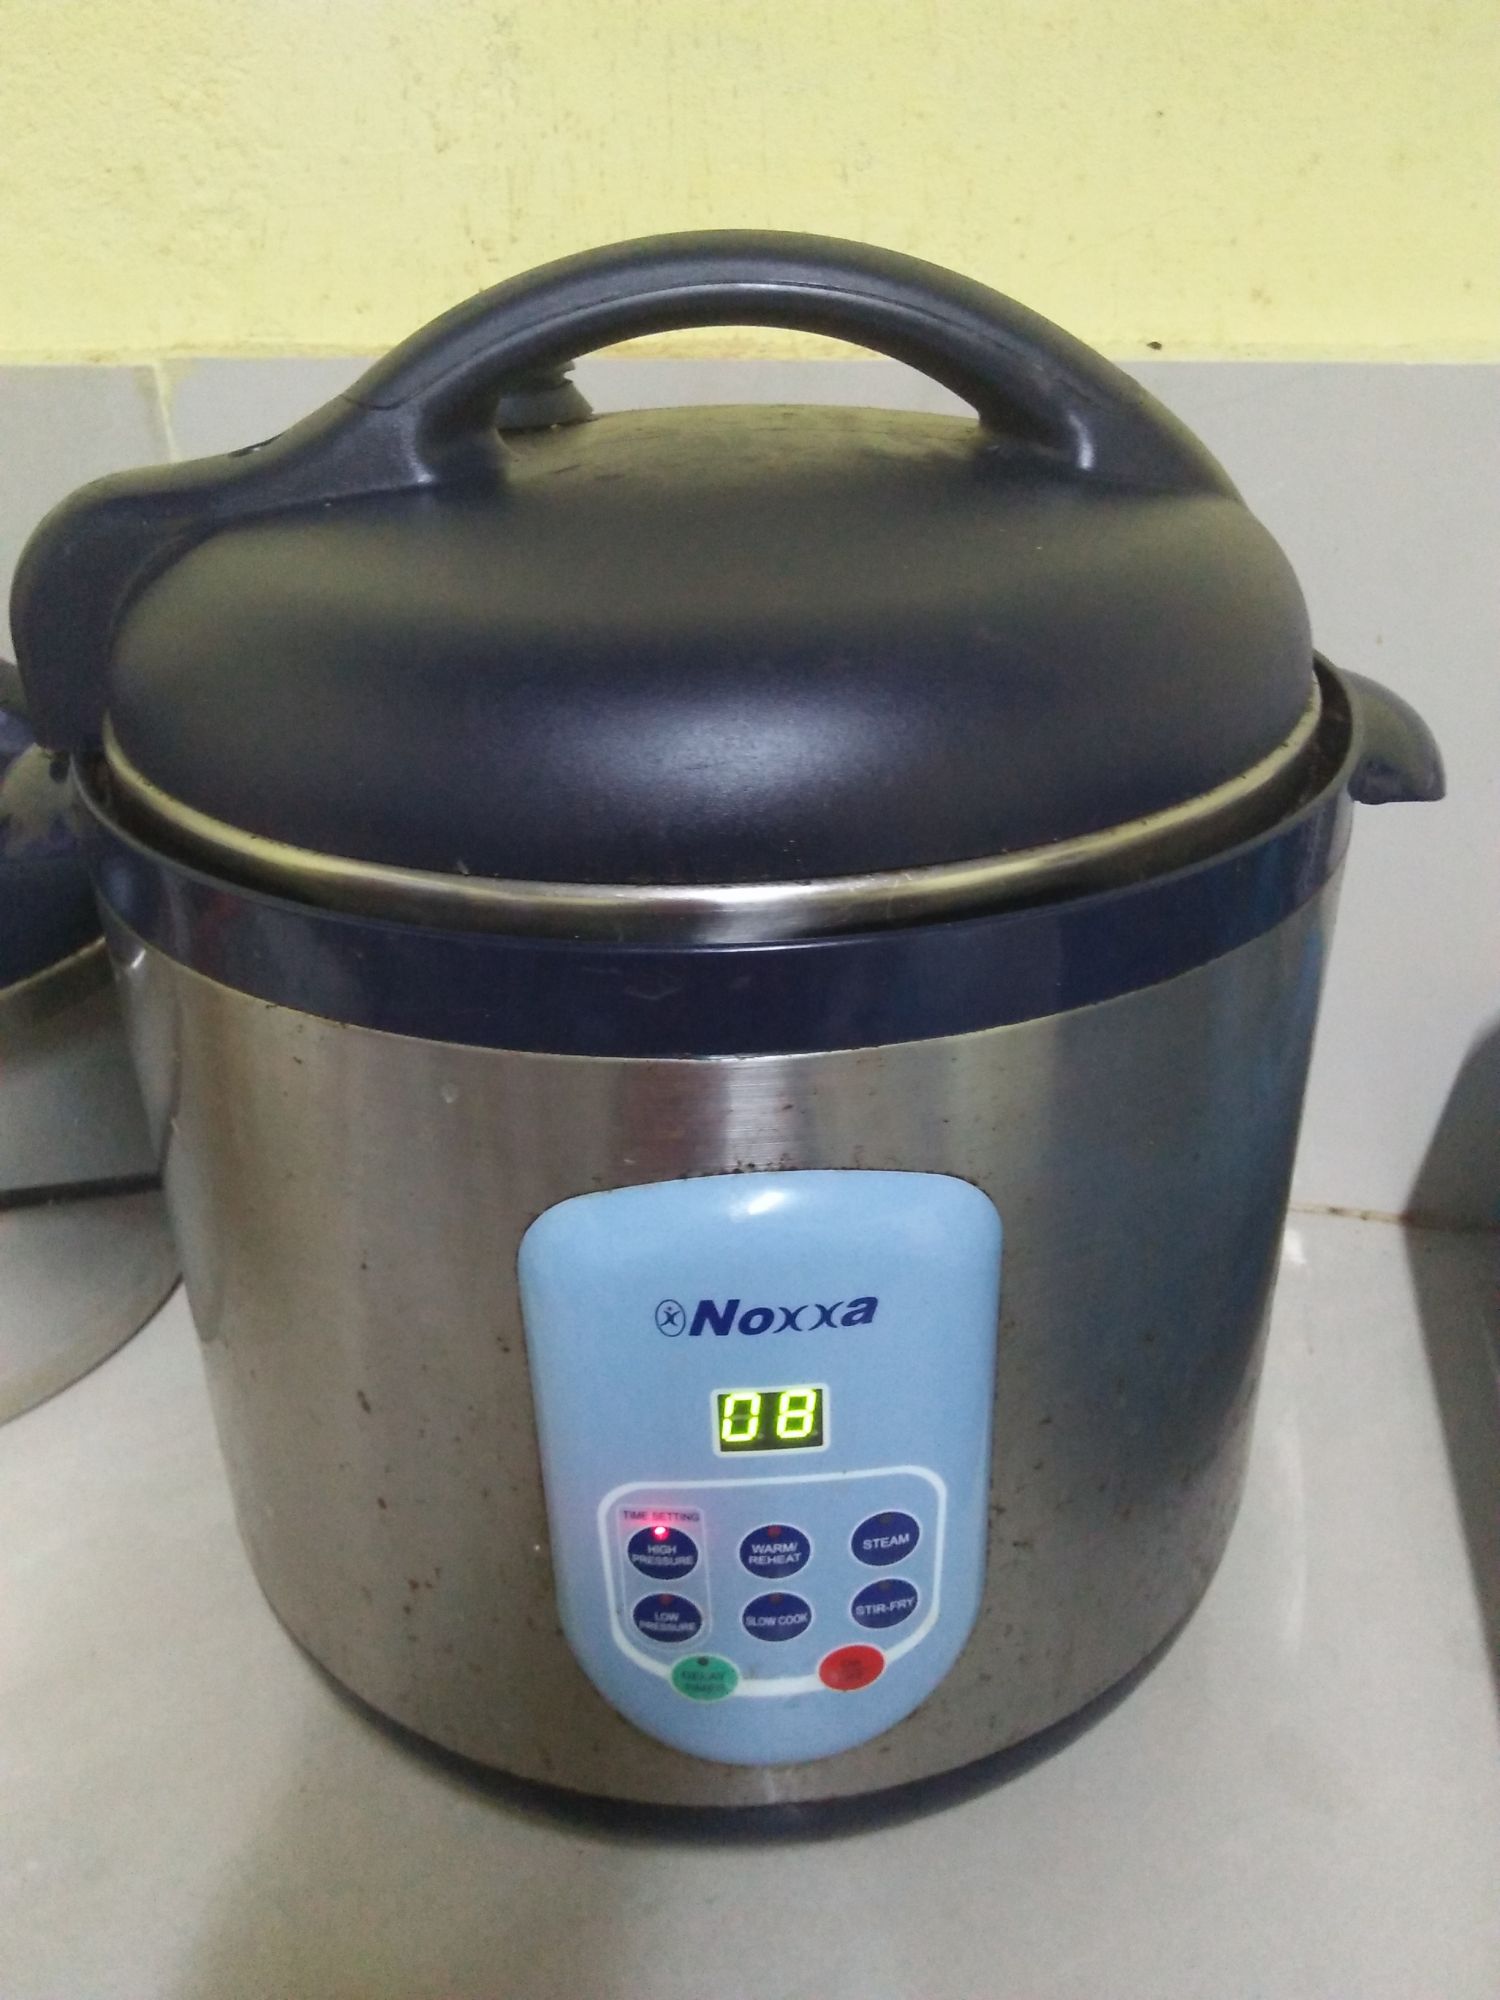 Noxxa Electric Multifunction Pressure Cooker, Home Appliances